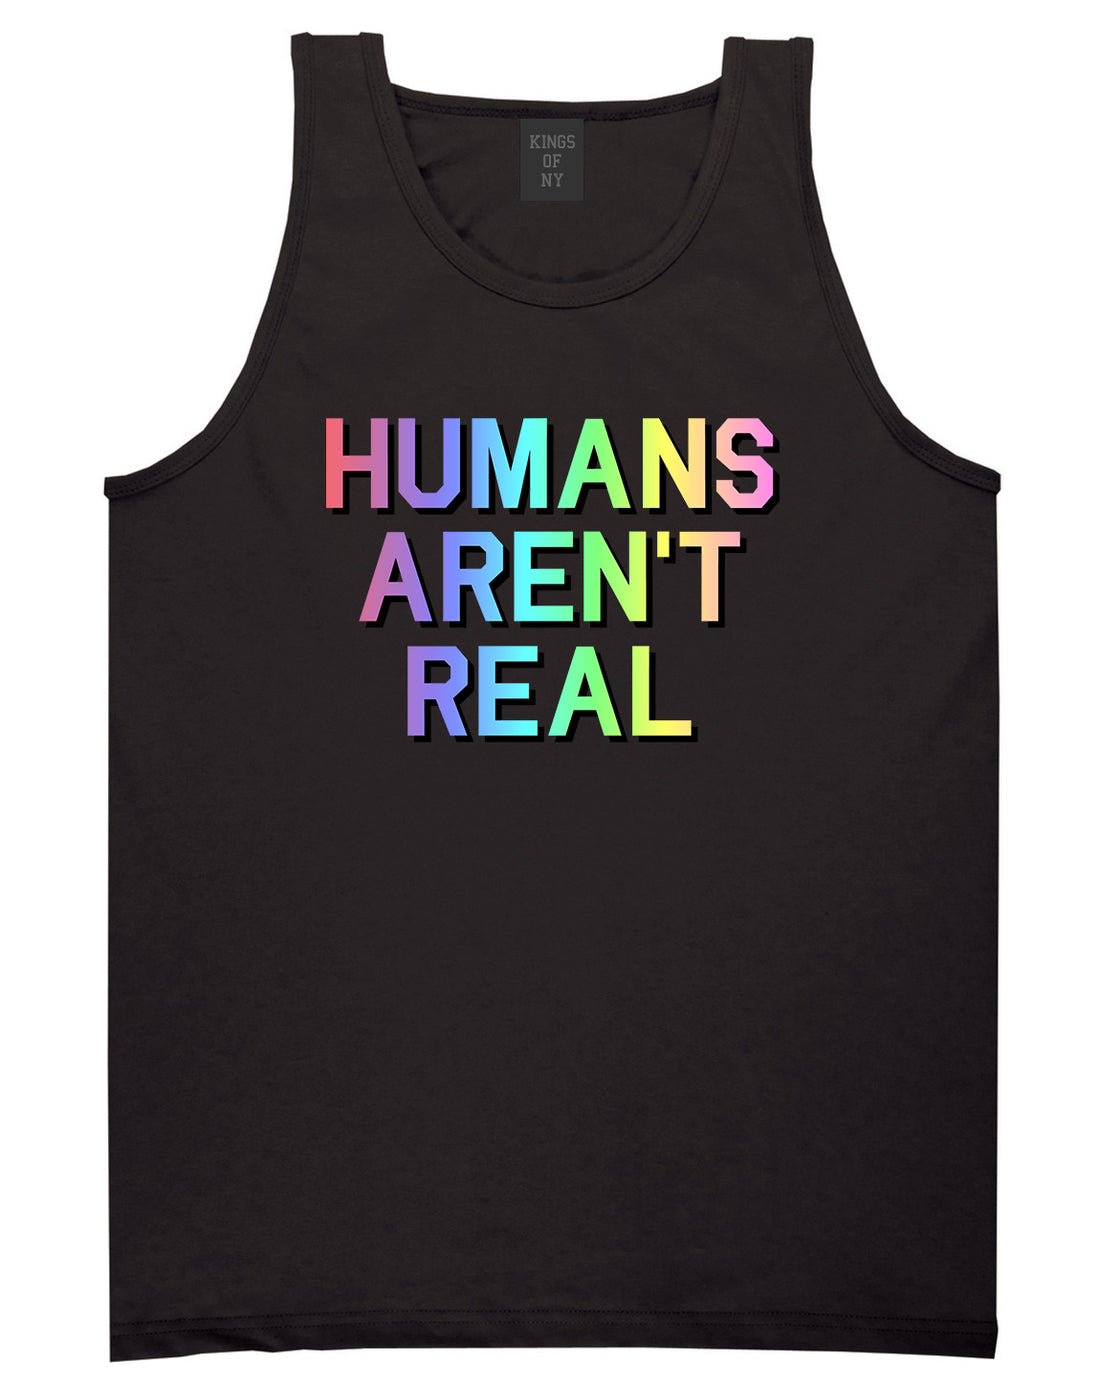 Humans Arent Real Tie Dye Hippie Rave Mens Tank Top T-Shirt Black